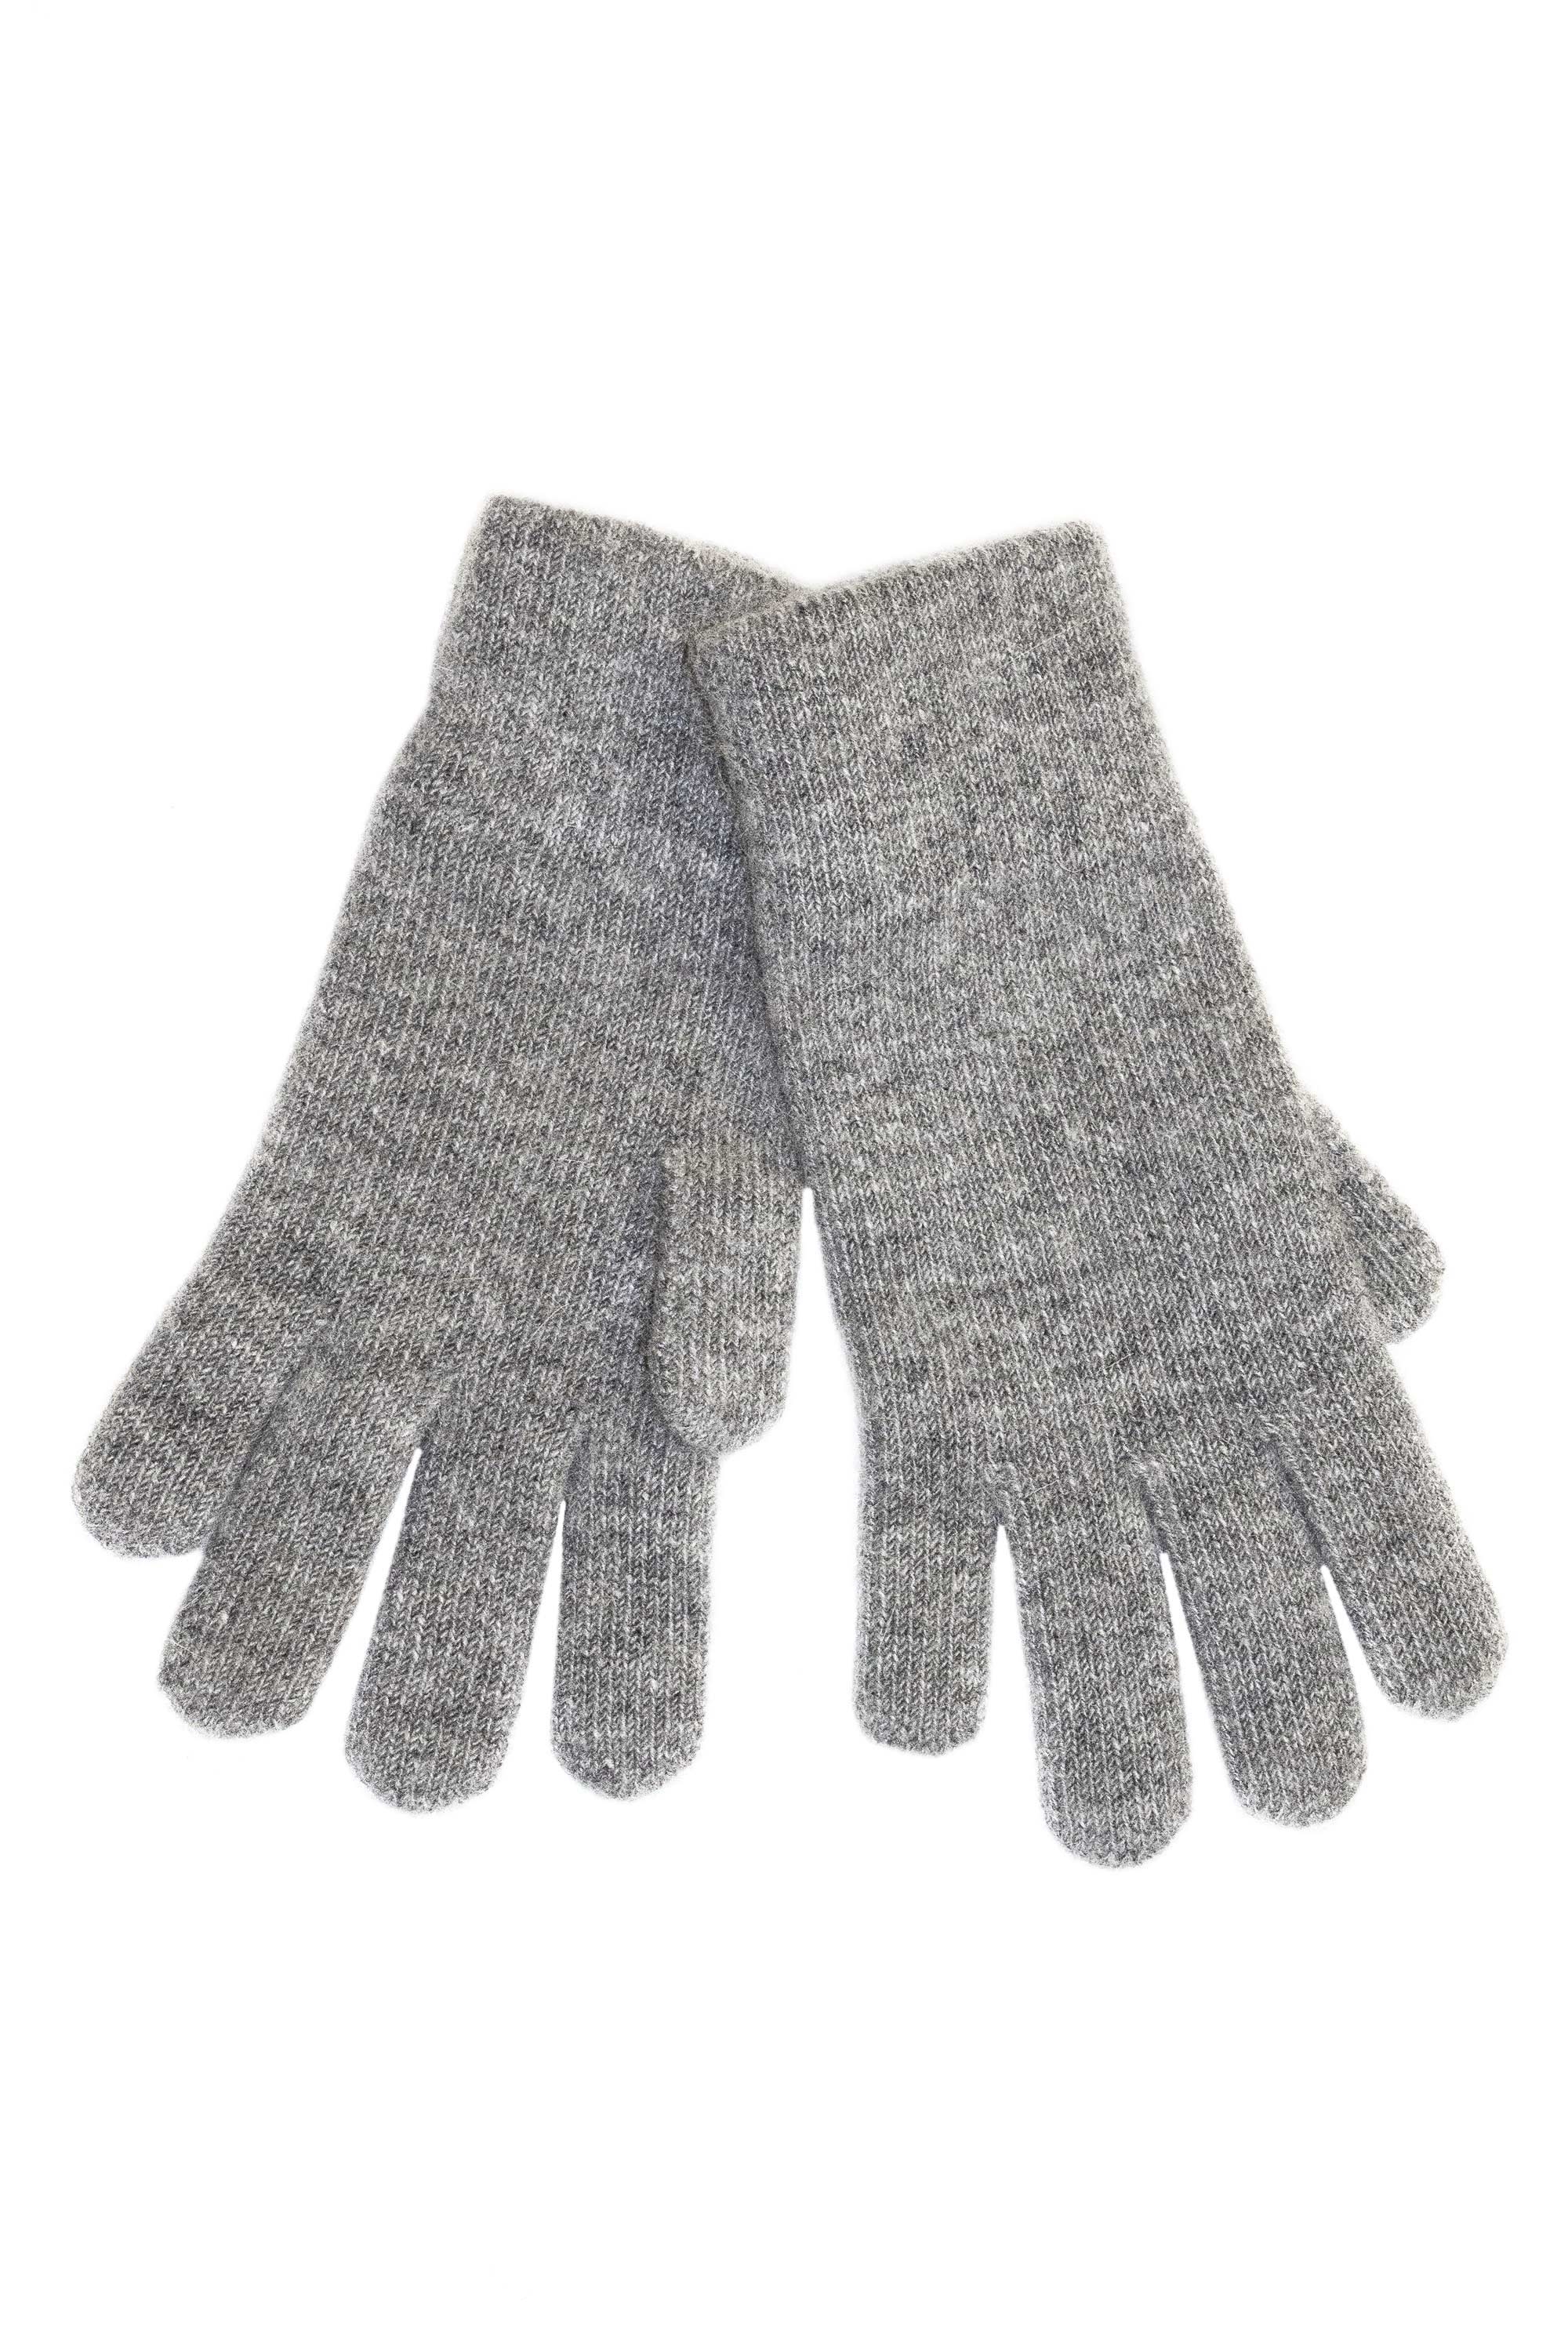 Alpha gloves